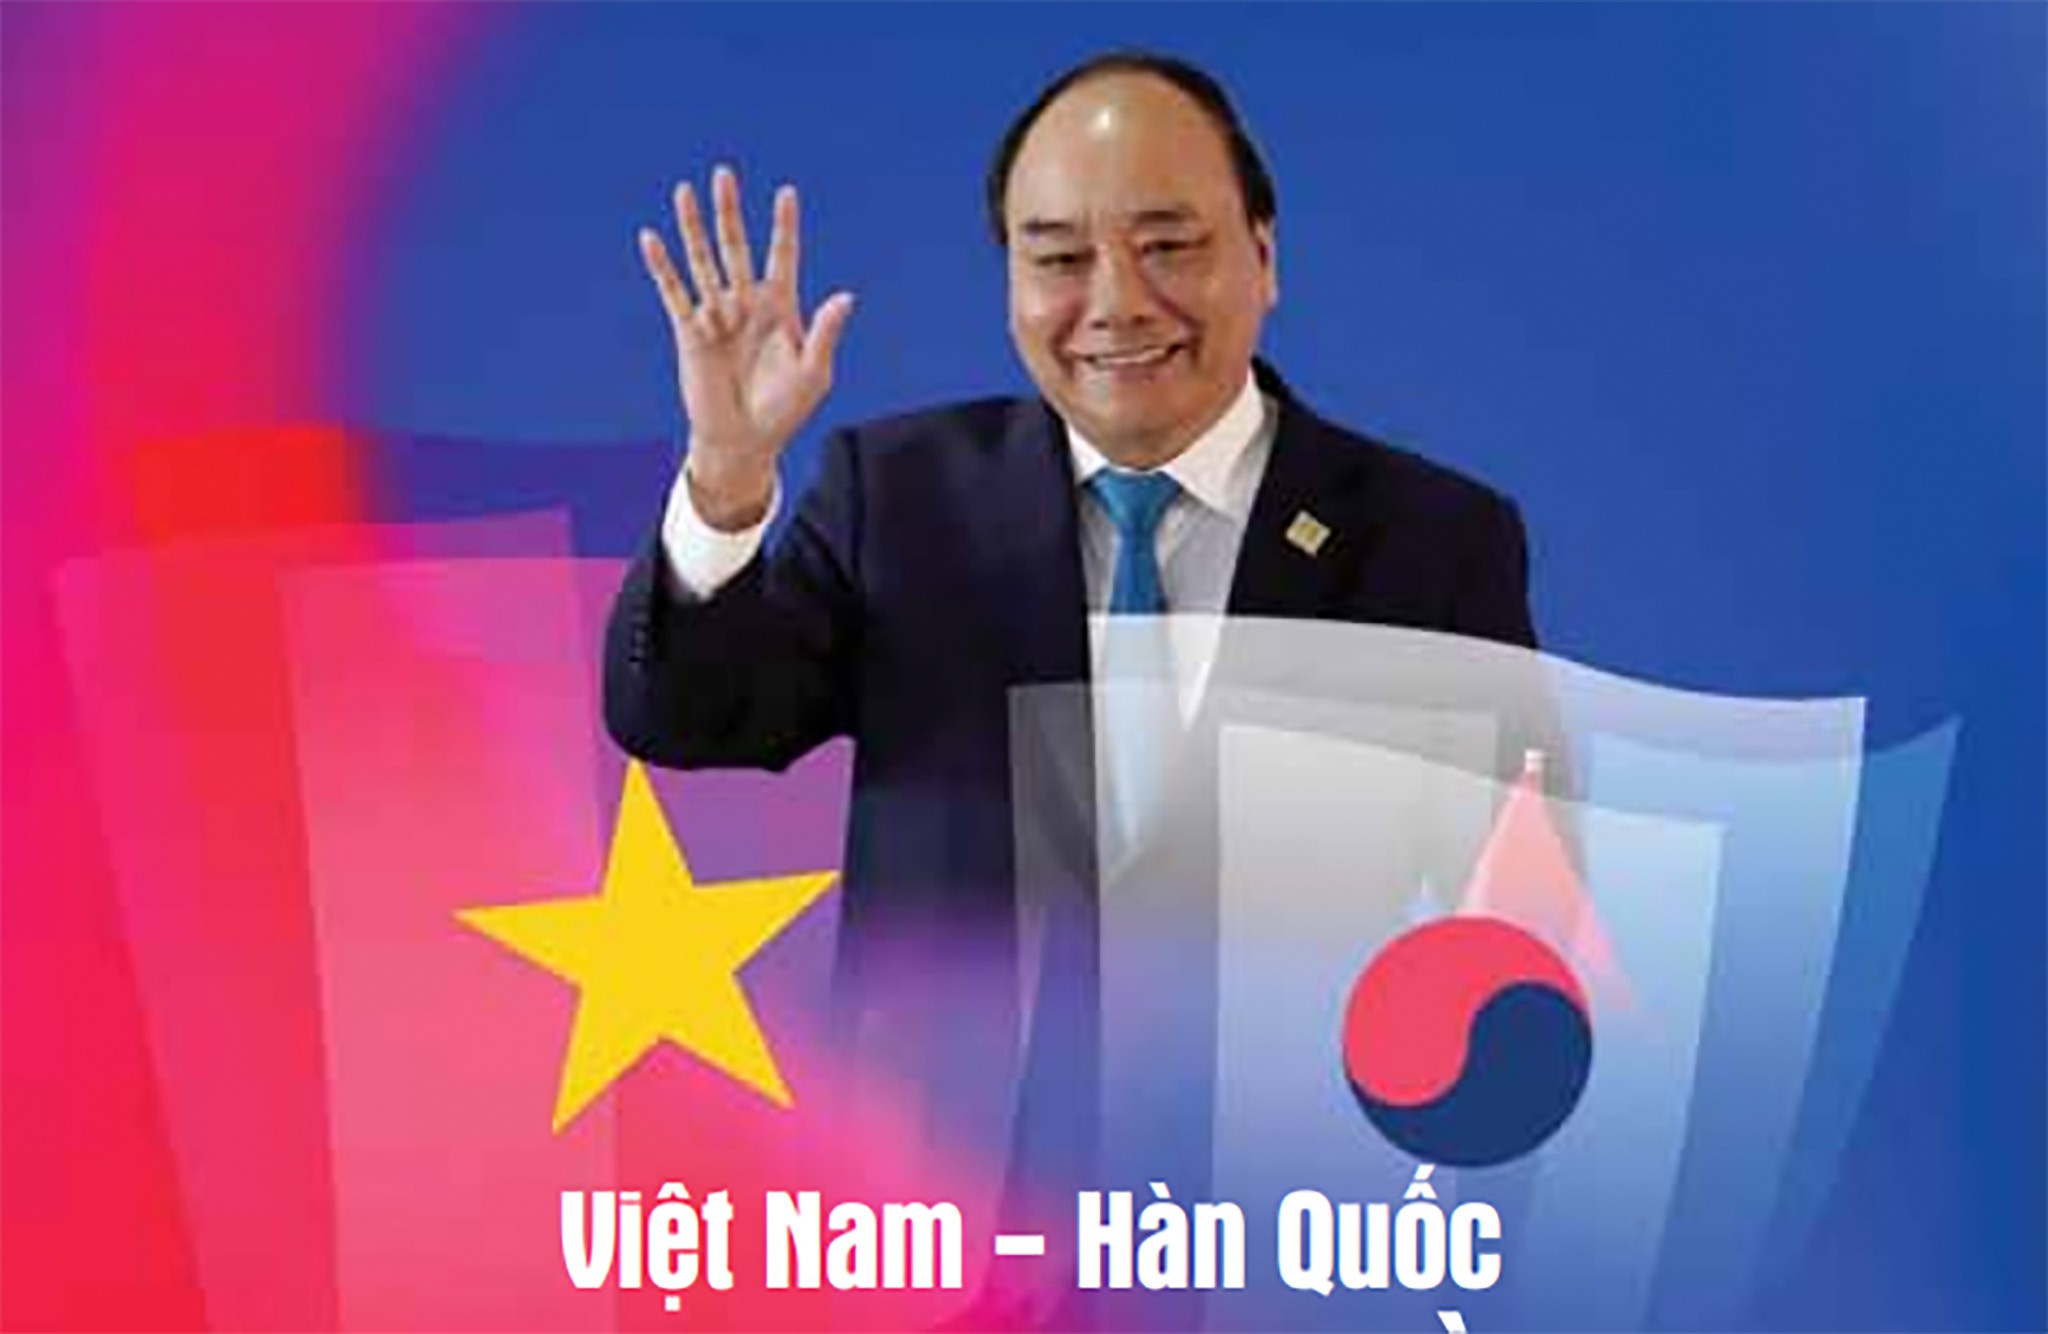 President’s state visit expected to further promote Vietnam-RoK relations | Politics | Vietnam+ (VietnamPlus)